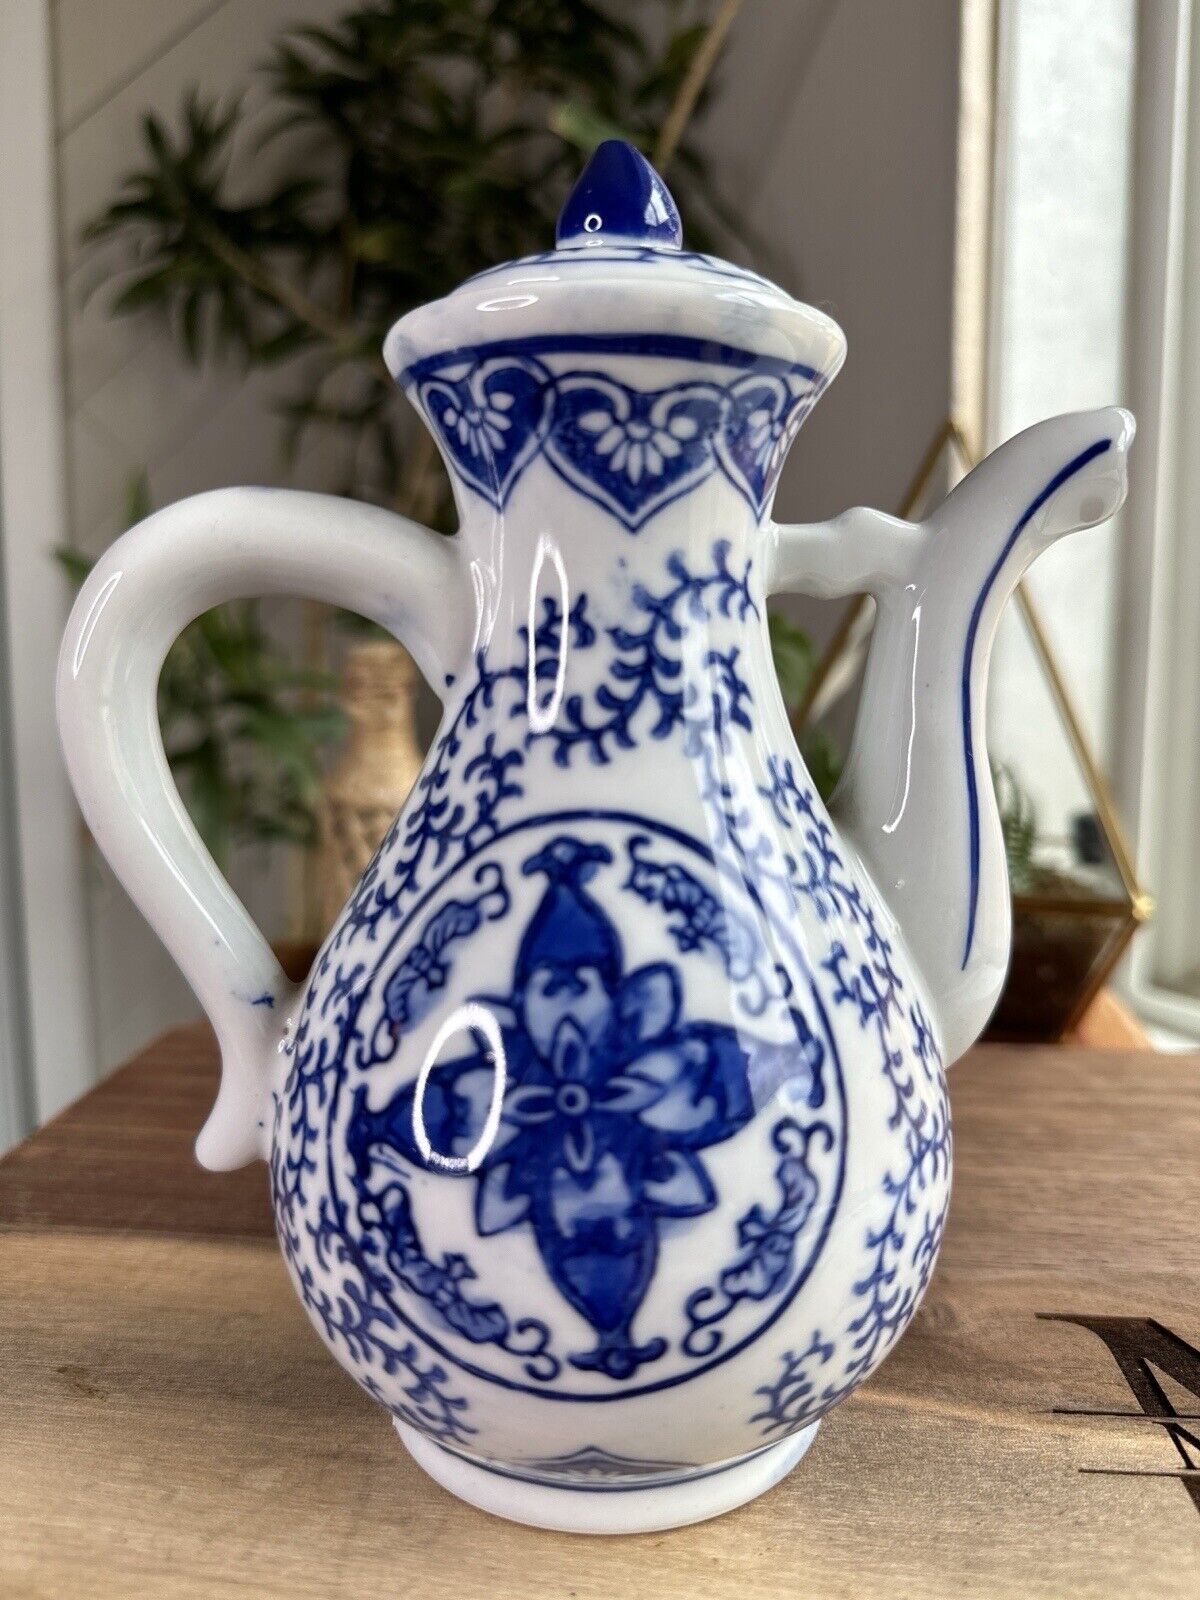 Vintage Bombay Ceramic Porcelain Teapot Blue and White